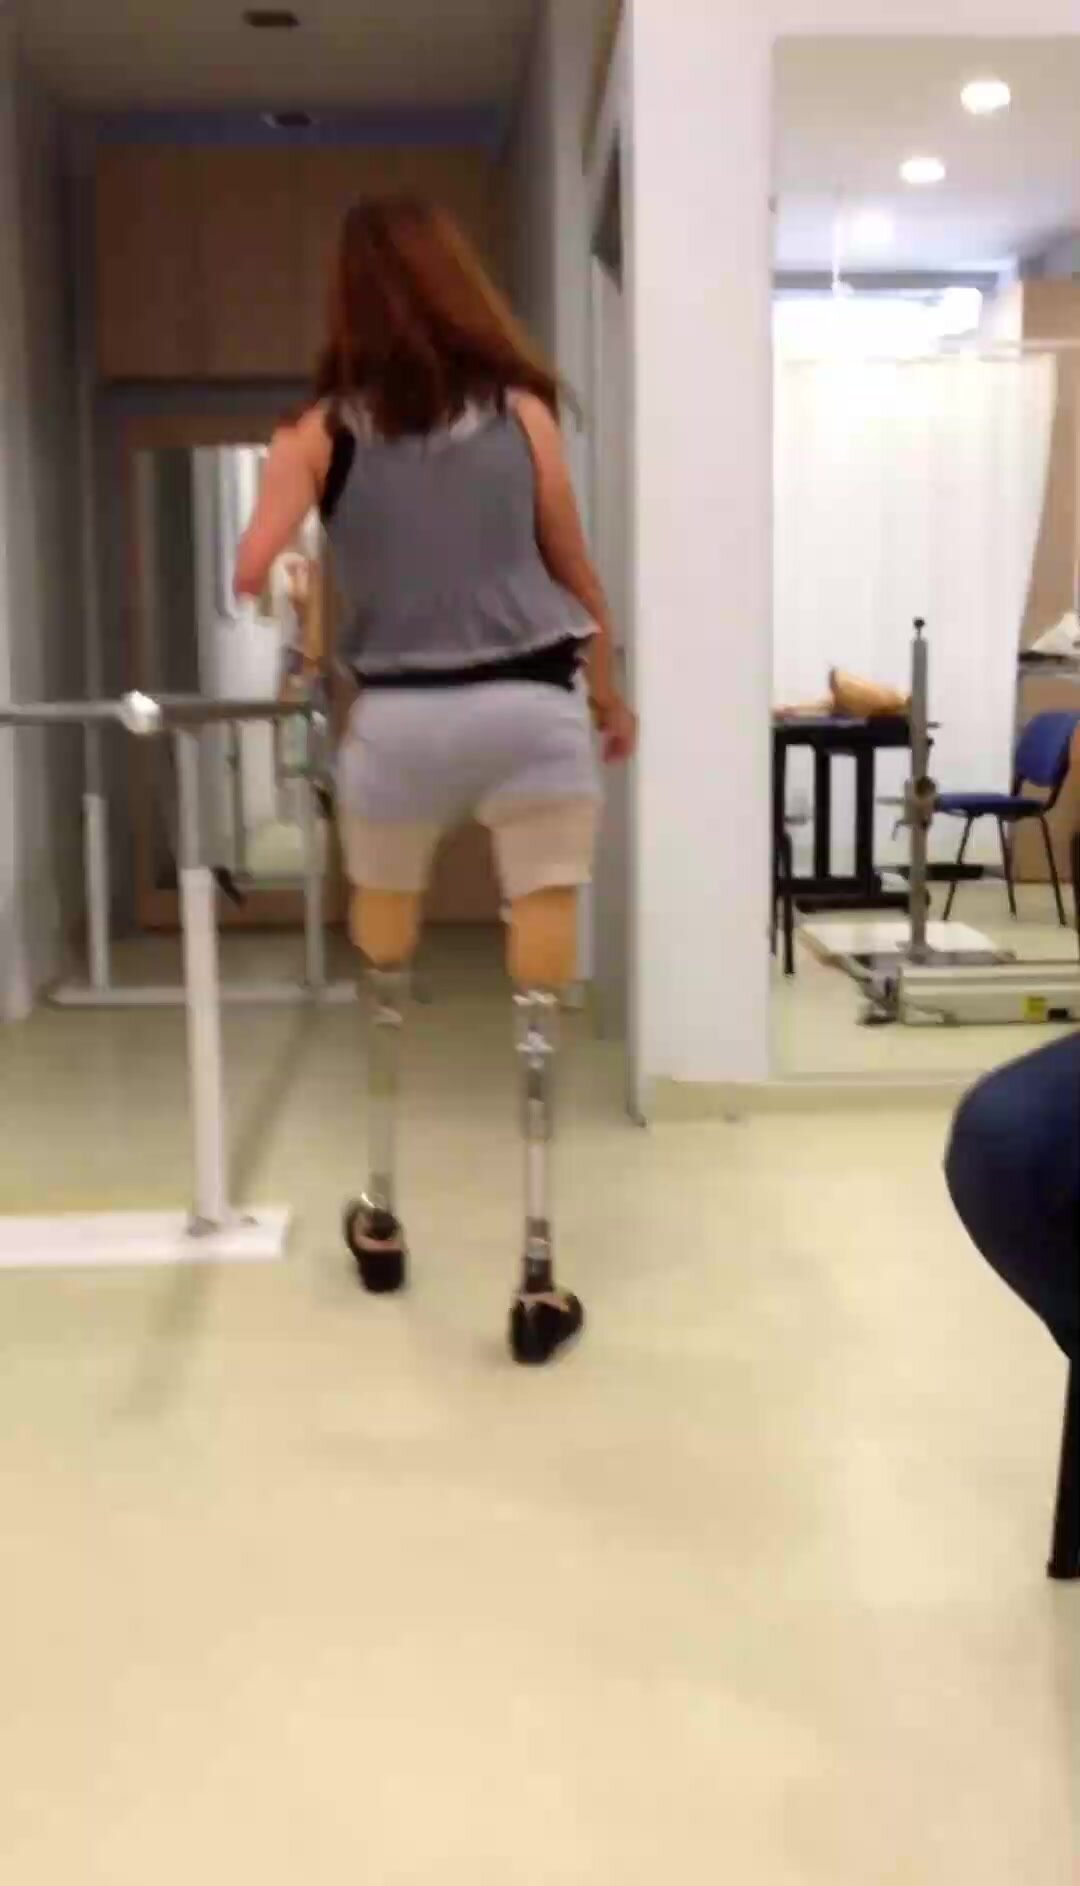 Dak triple woman learns to walk